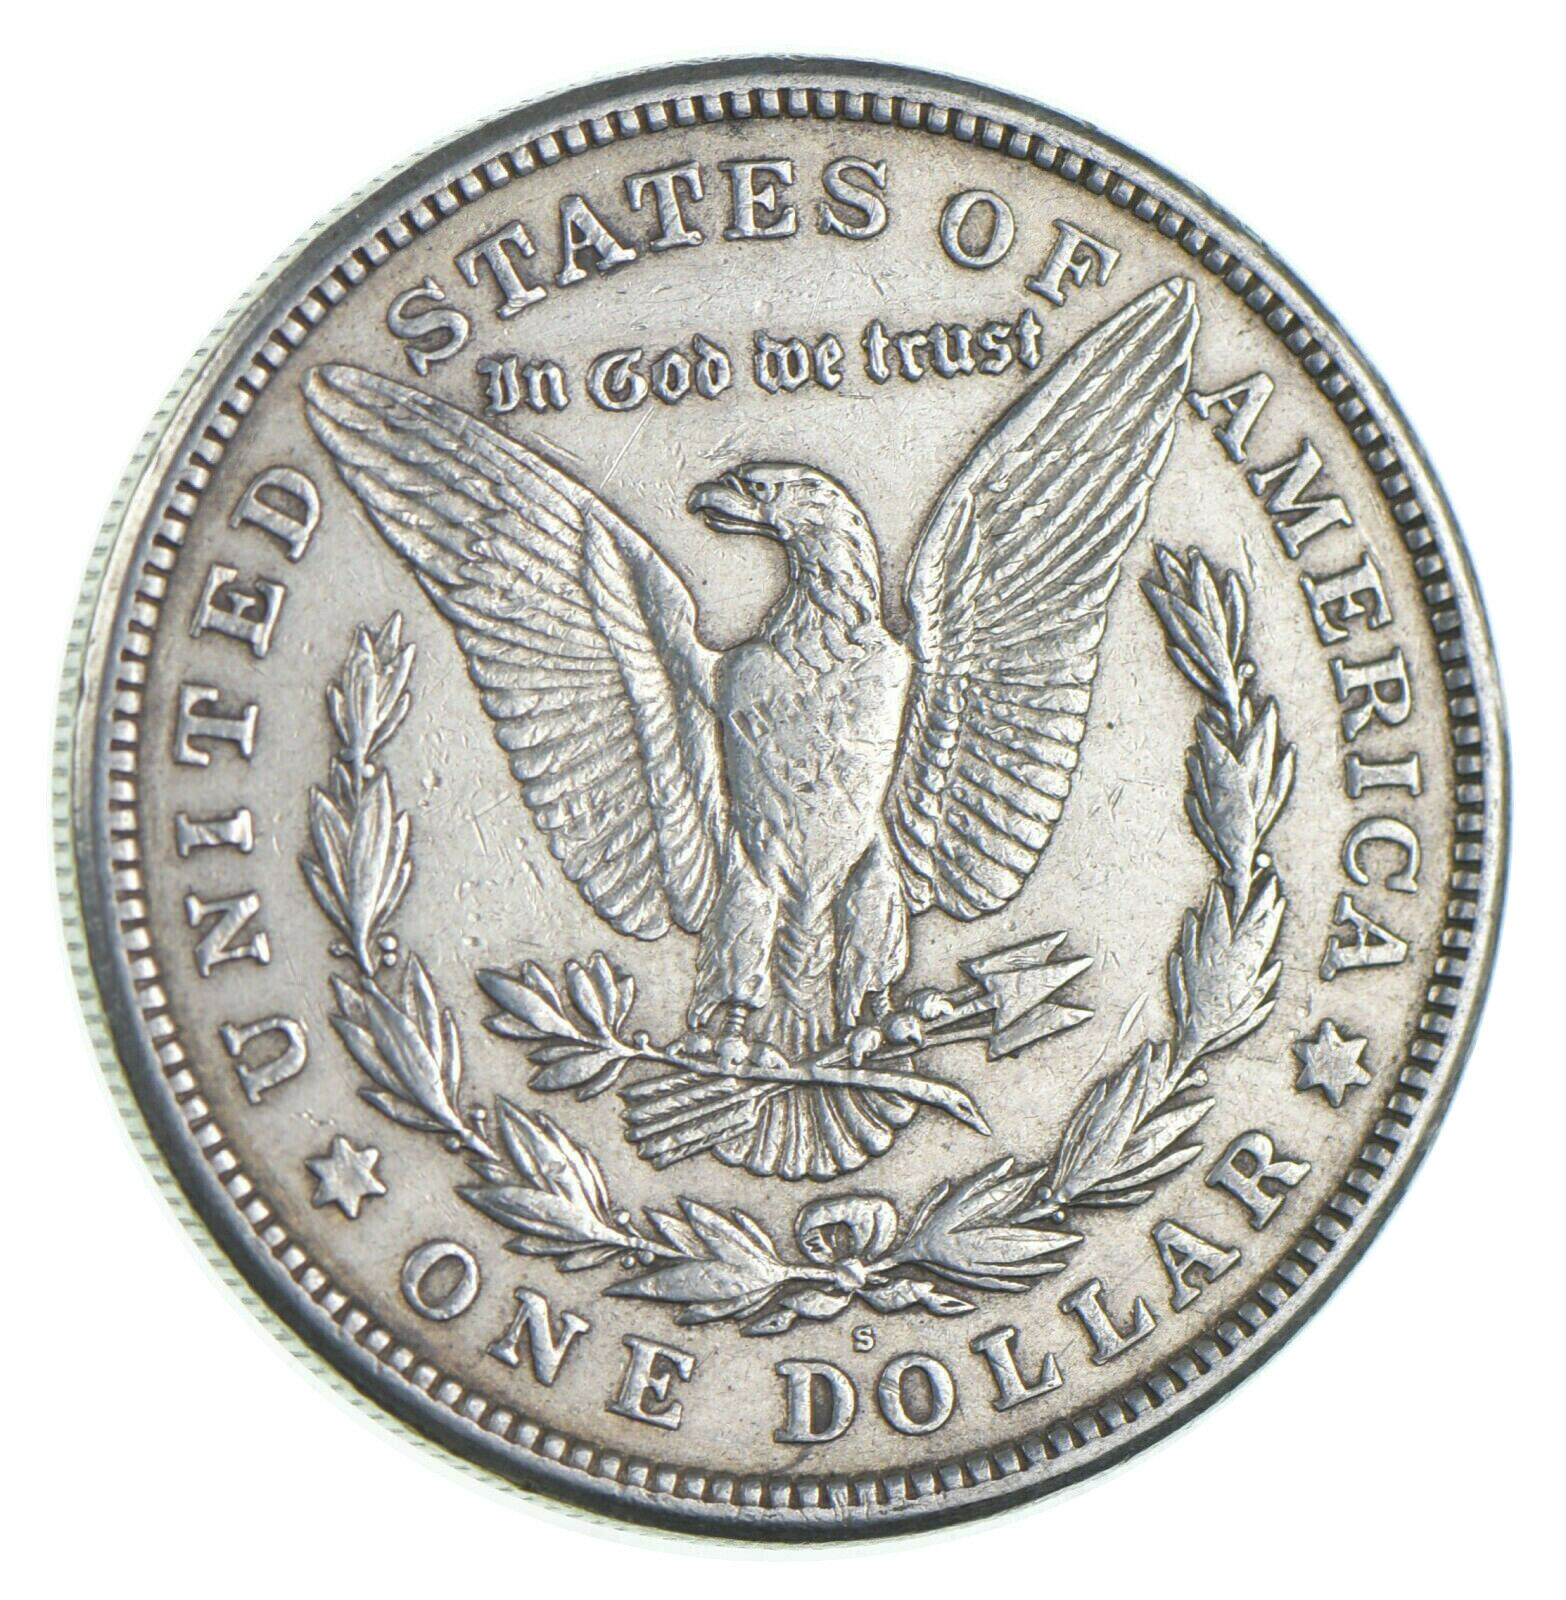 1921-s Morgan Silver Dollar - Last Year Issue 90% $1.00 Bullion Last 's' Minted